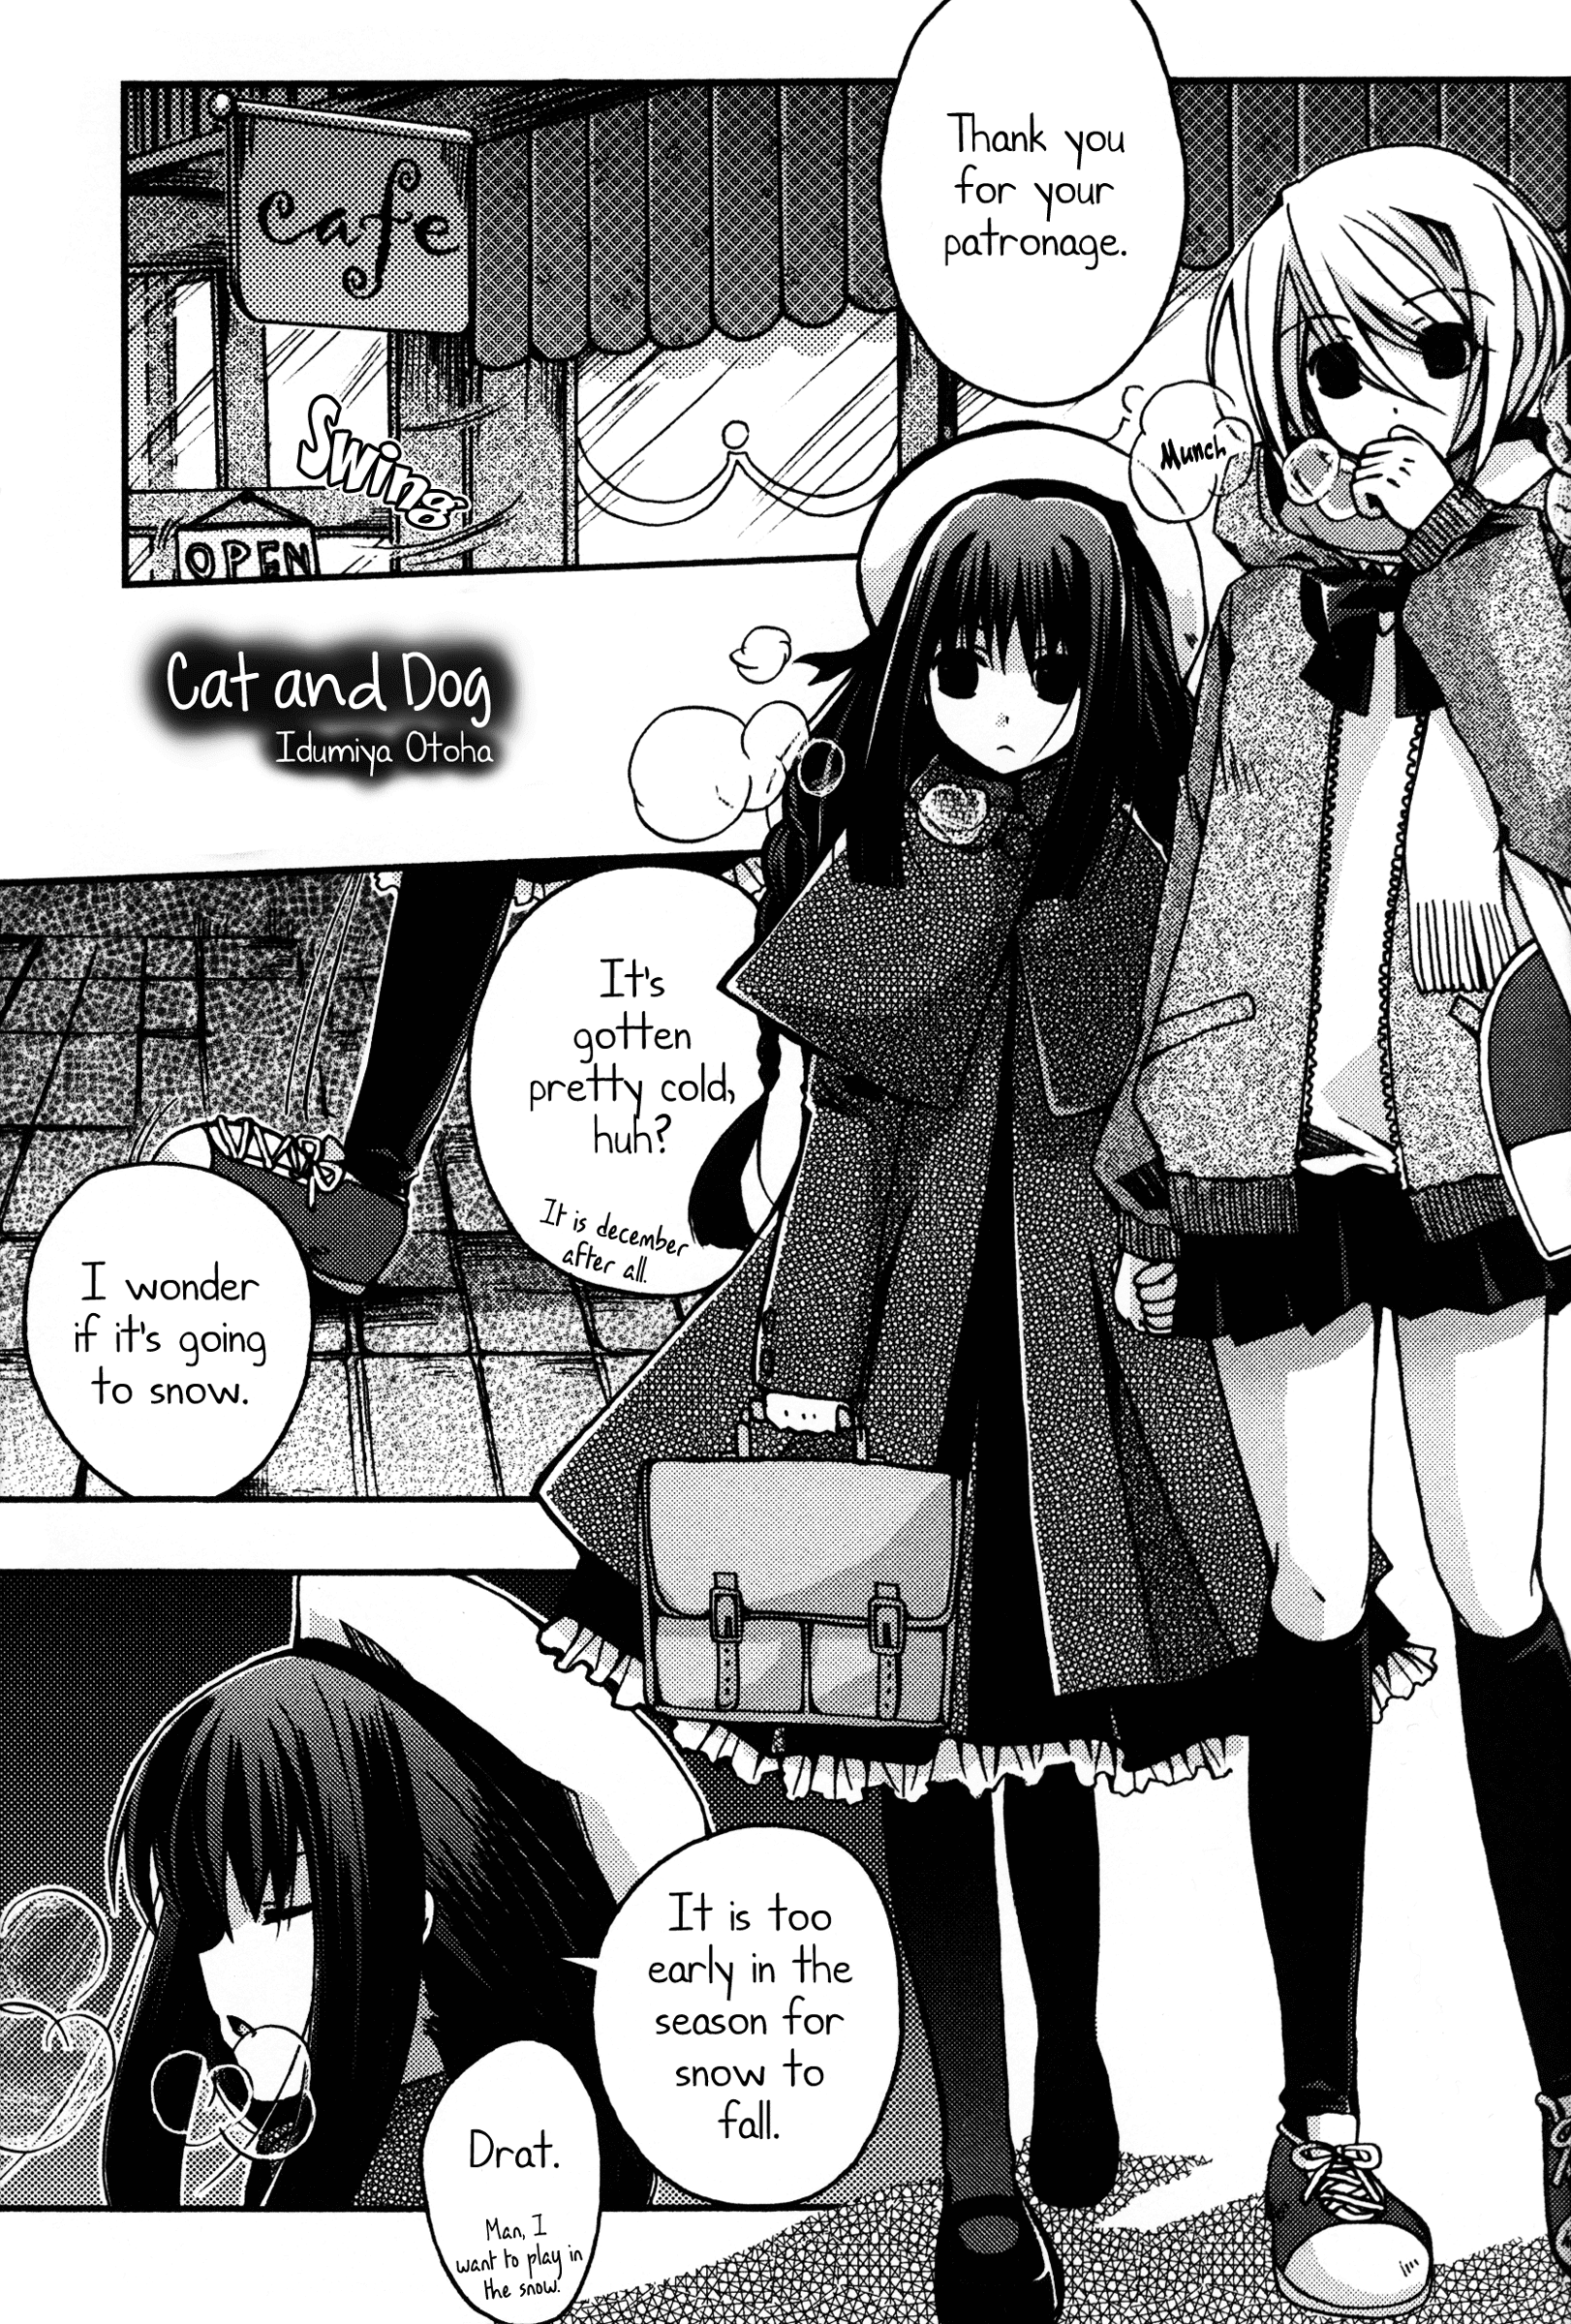 Shinigami Alice - Page 3